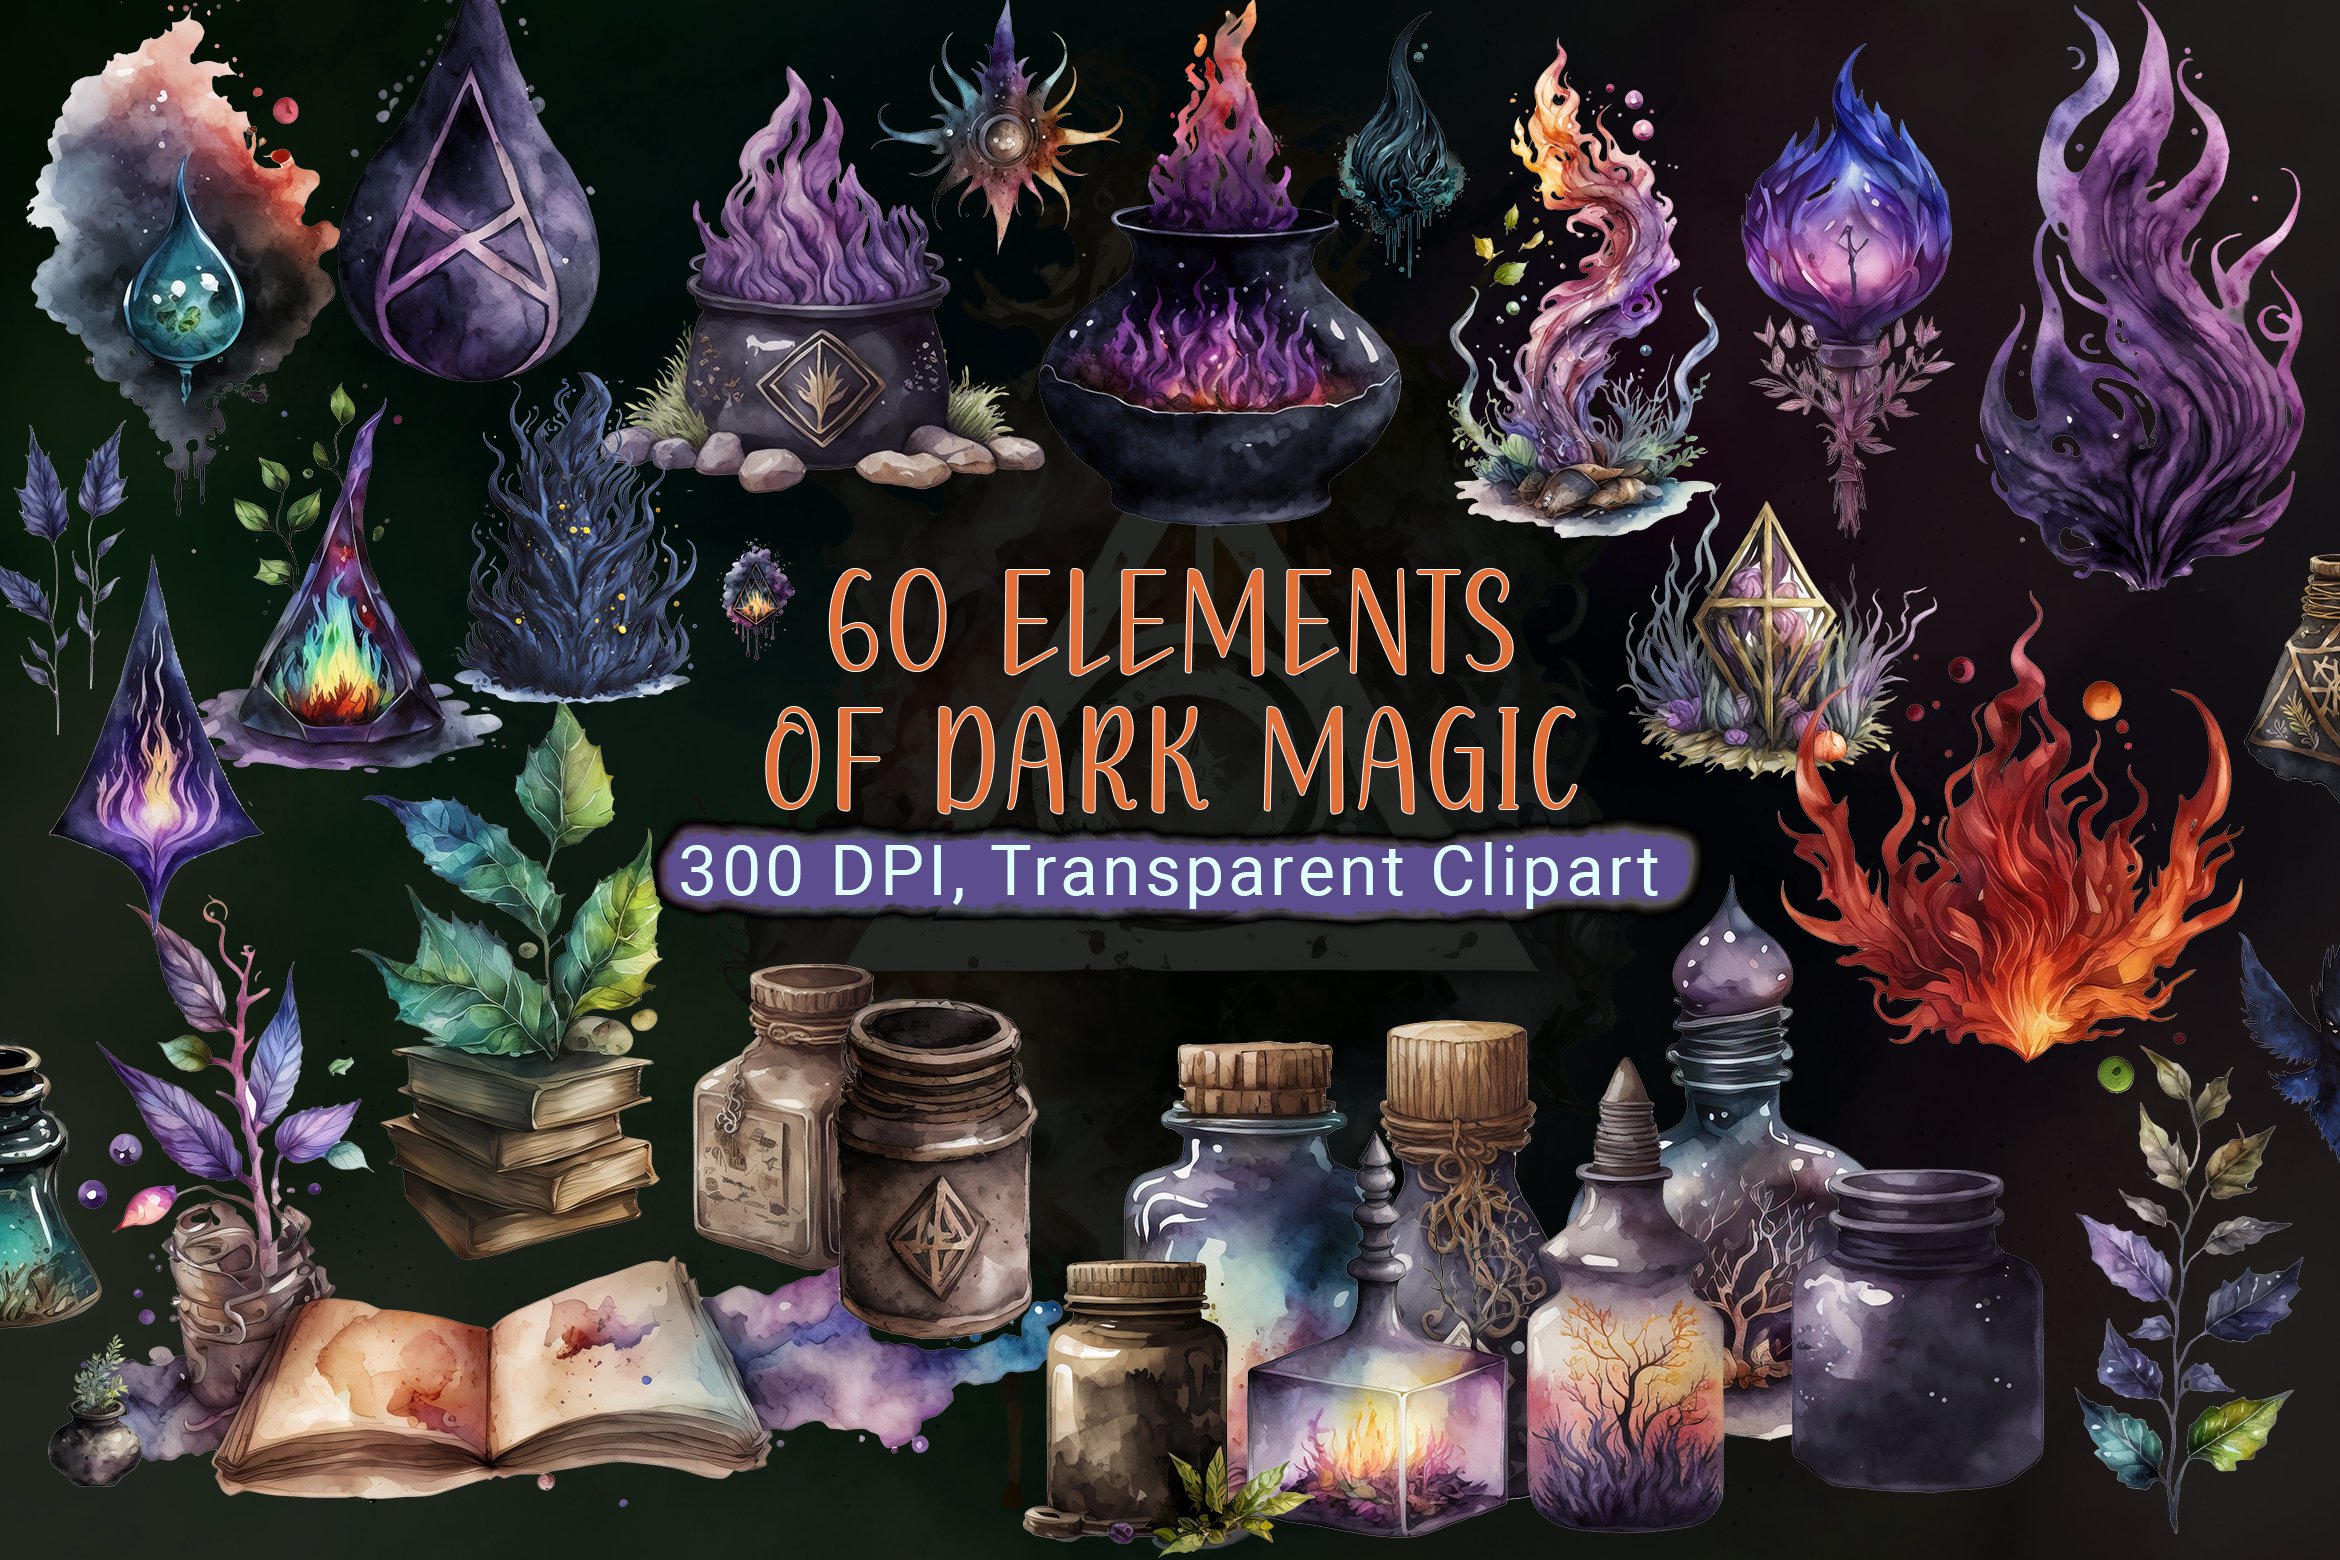 60 Dark Magic Elements cover image.